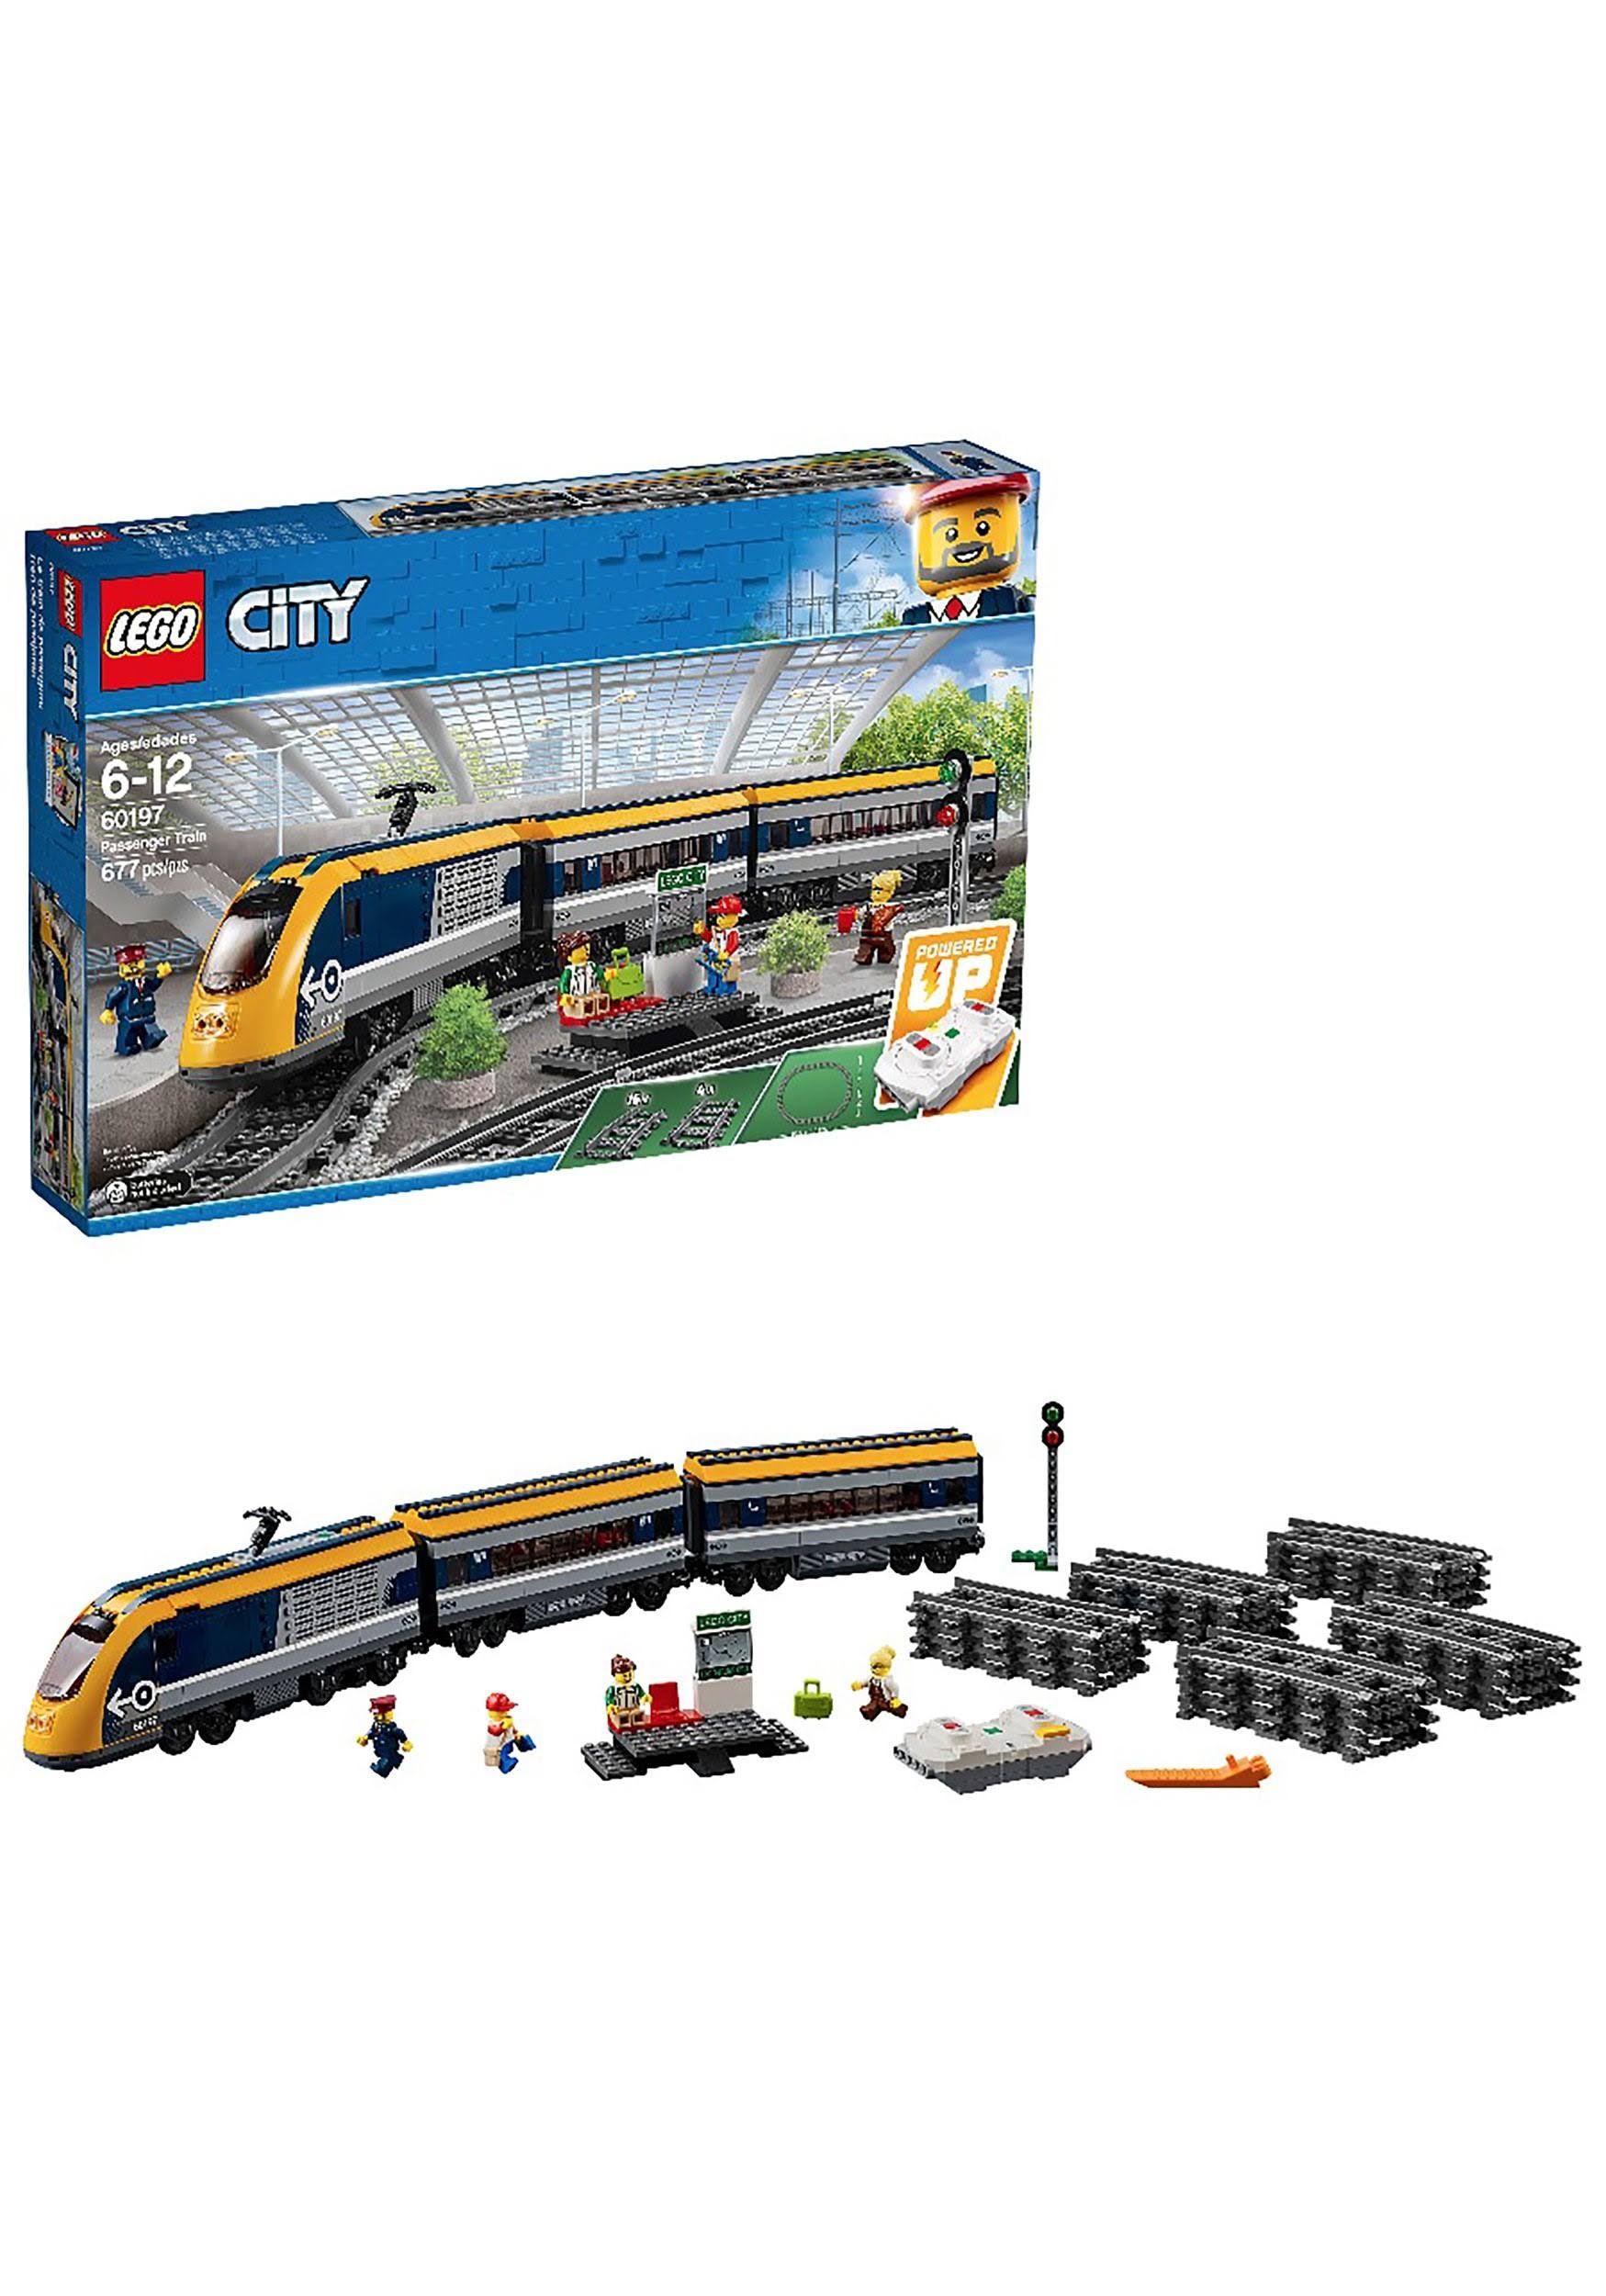 Lego 60197 City Passenger Train